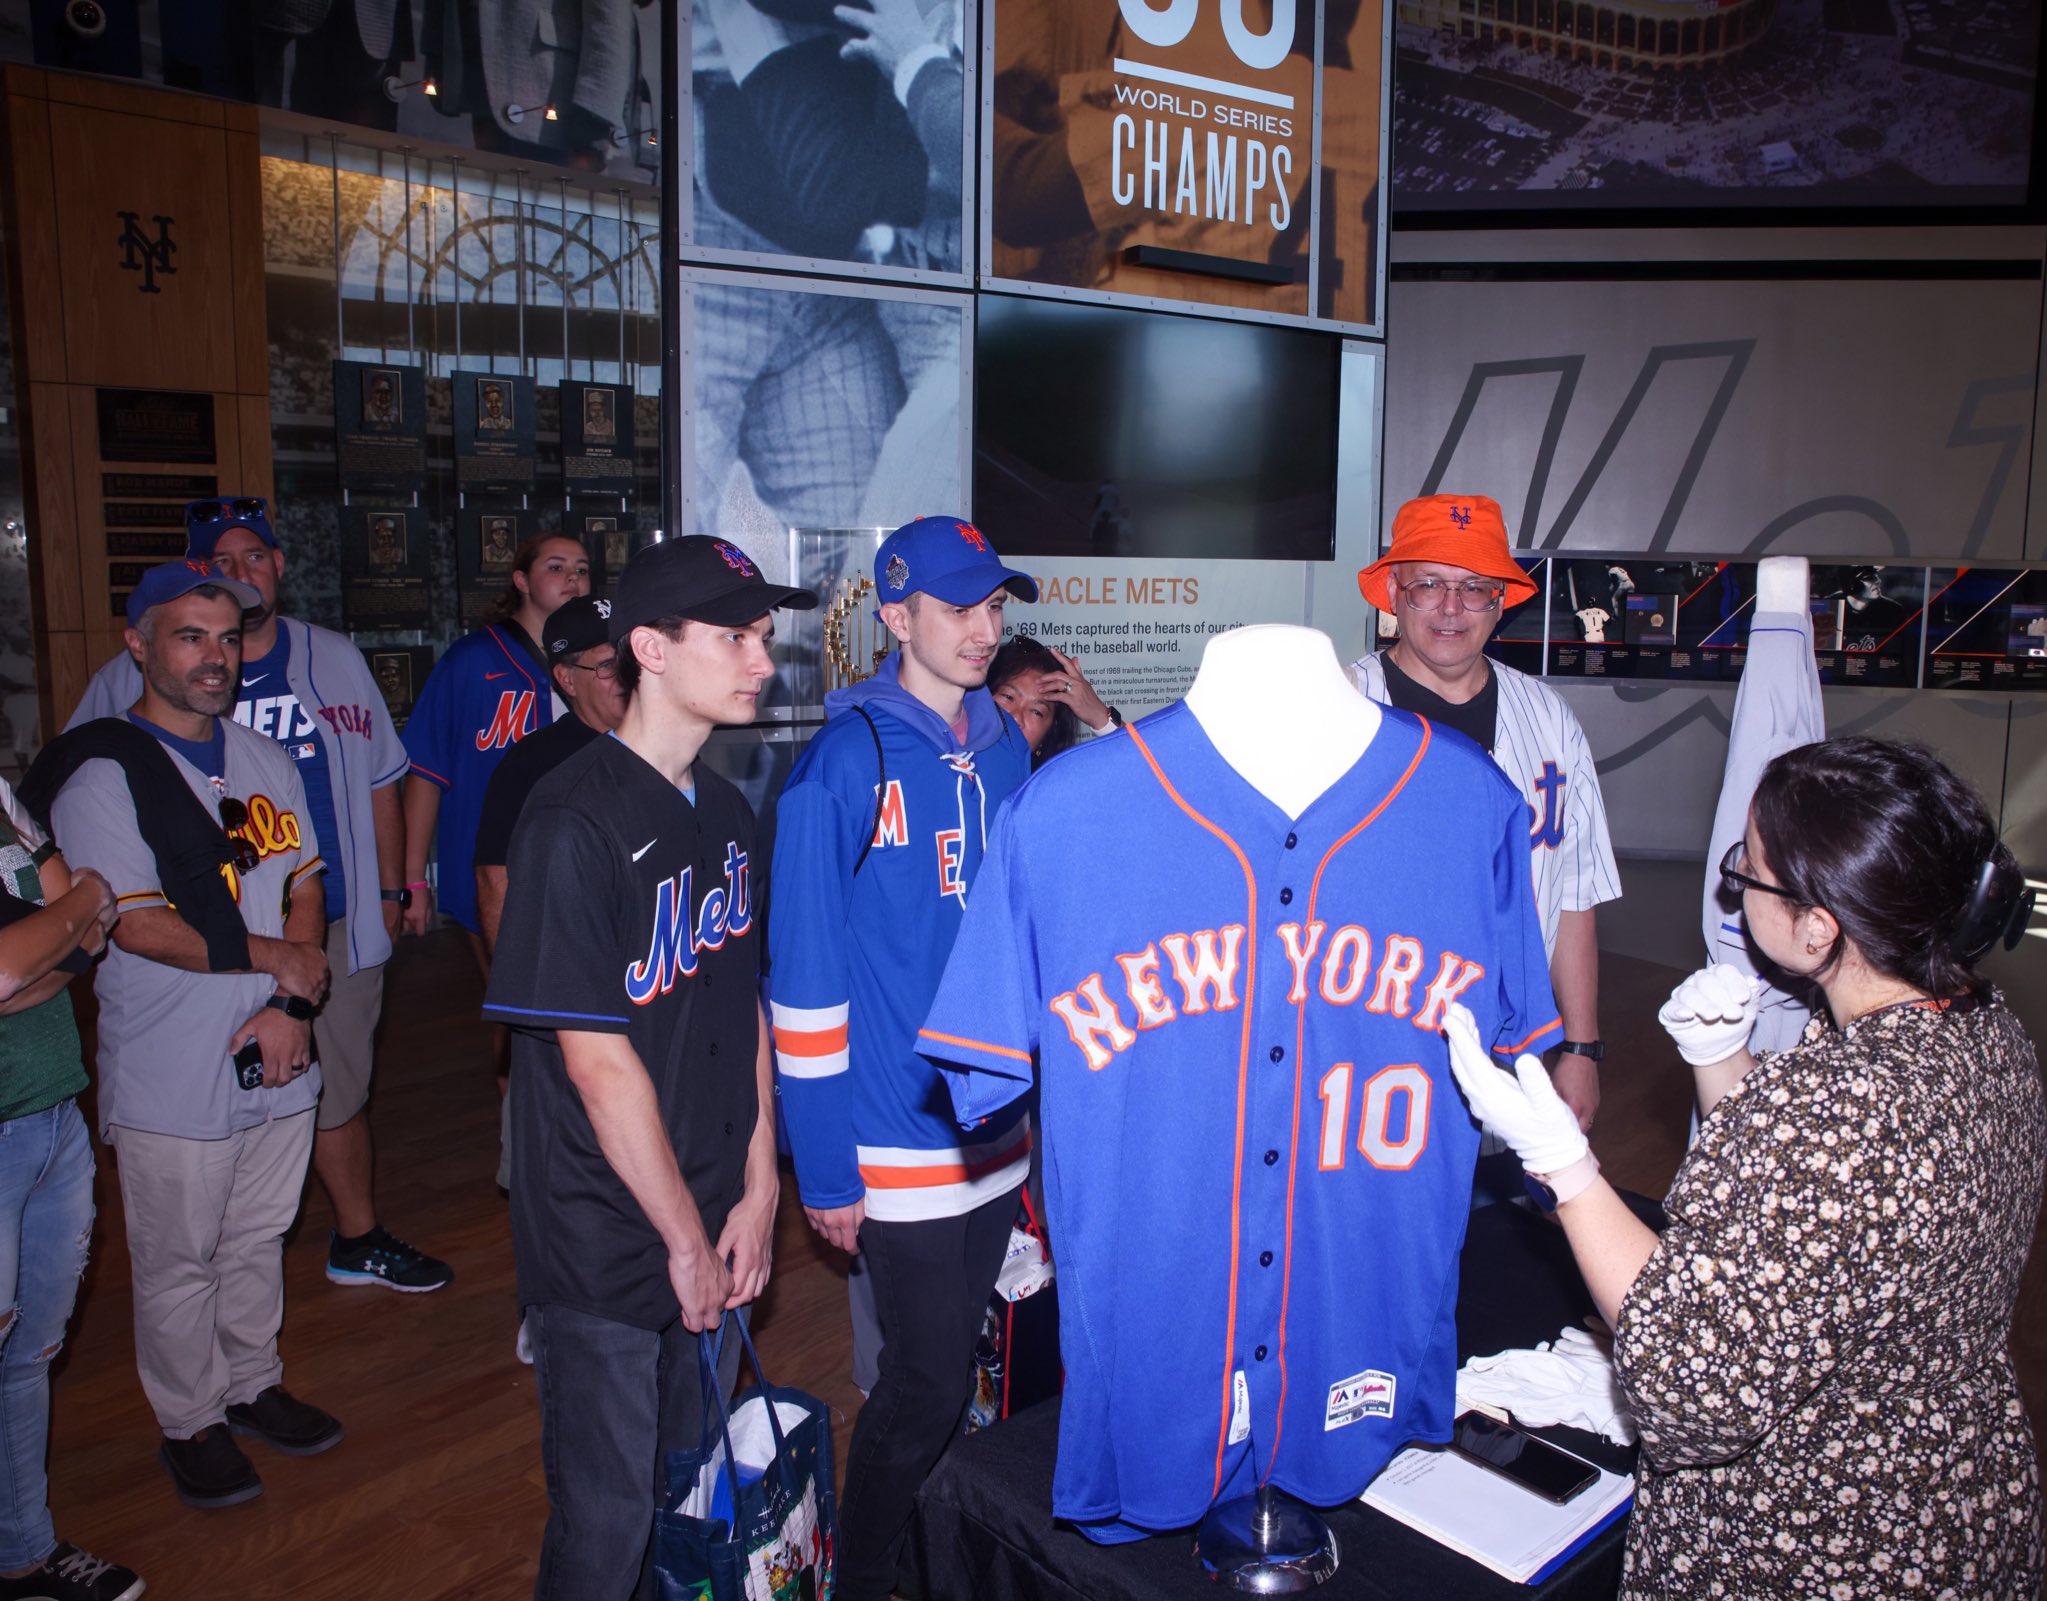 Francisco Lindor New York Mets Youth Black Roster Name & Number T-Shirt 